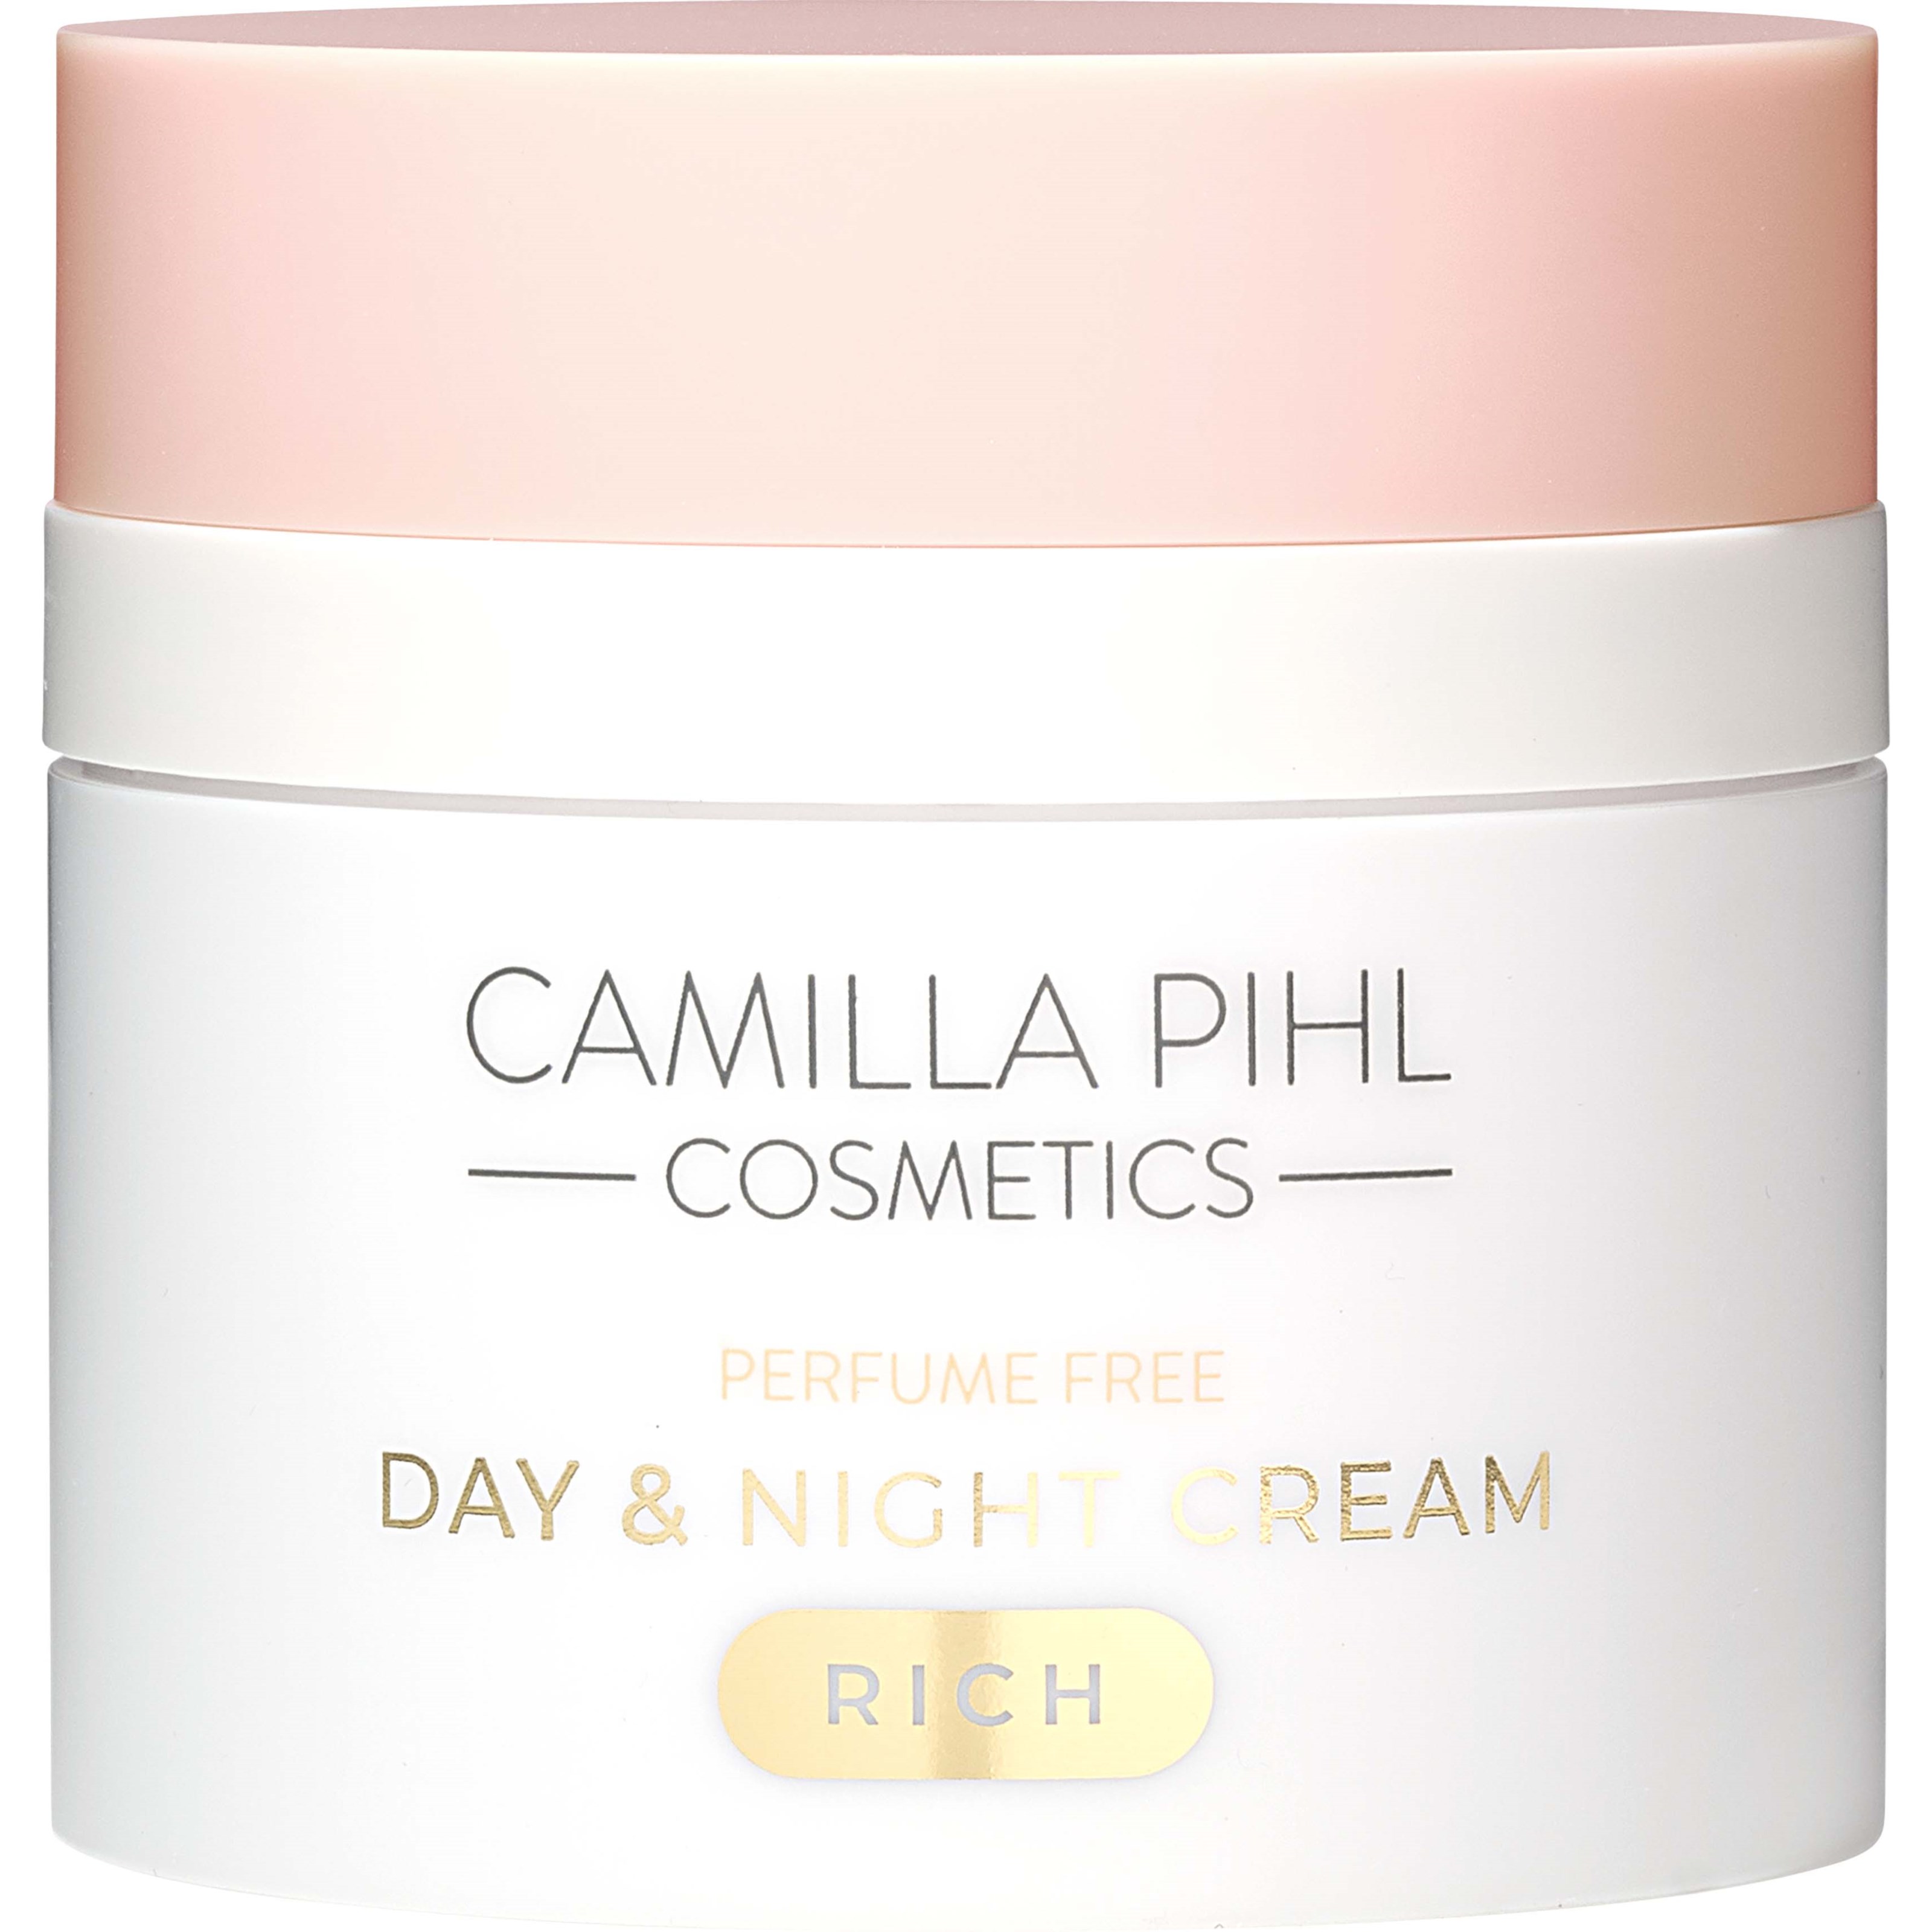 Bilde av Camilla Pihl Cosmetics Day & Night Cream Rich 50 Ml